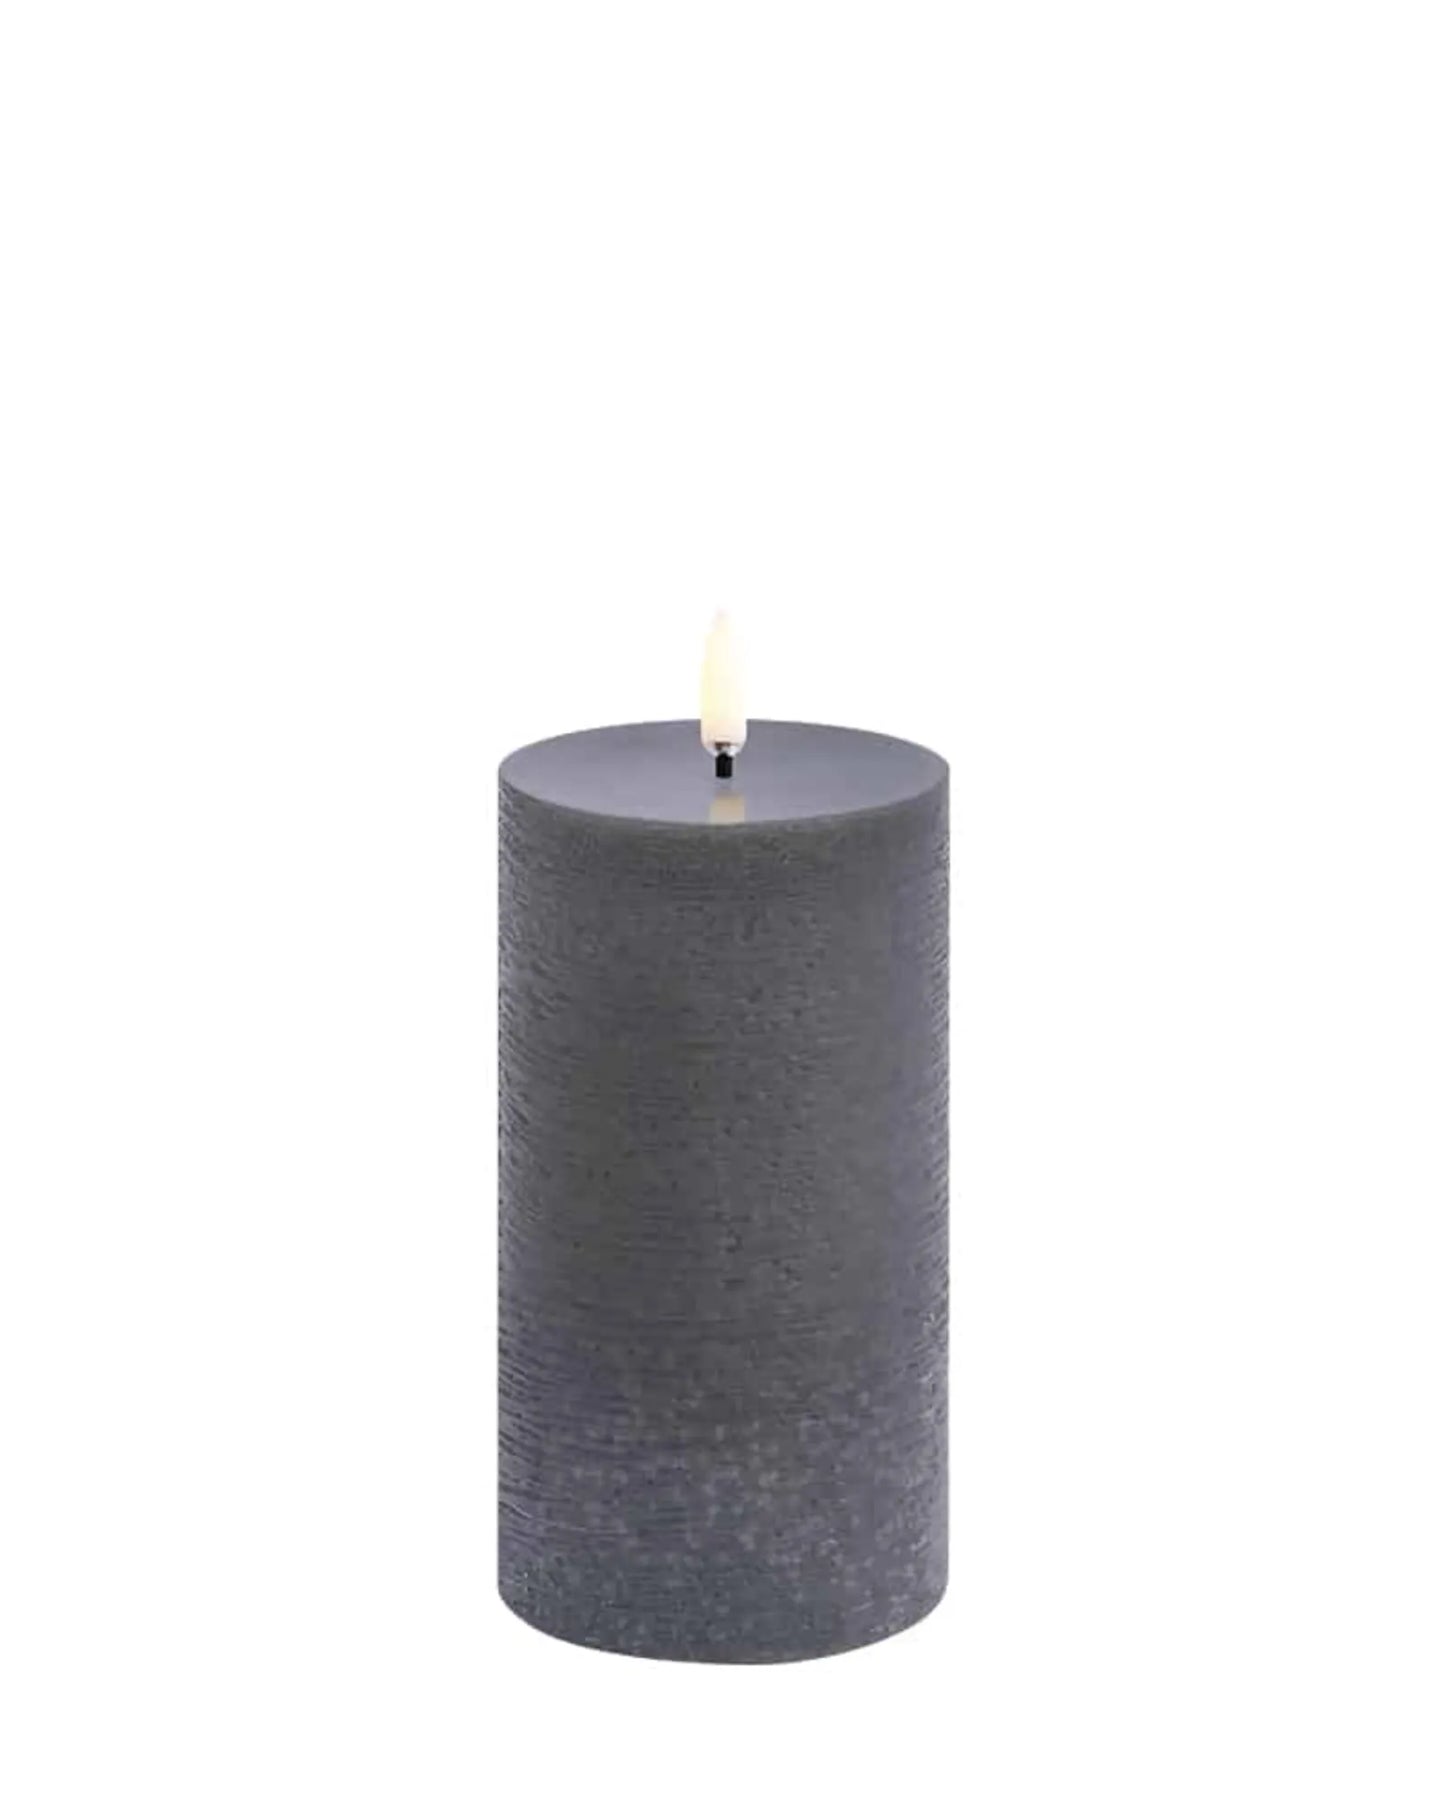 LED Pillar Candle - Rustic Grey